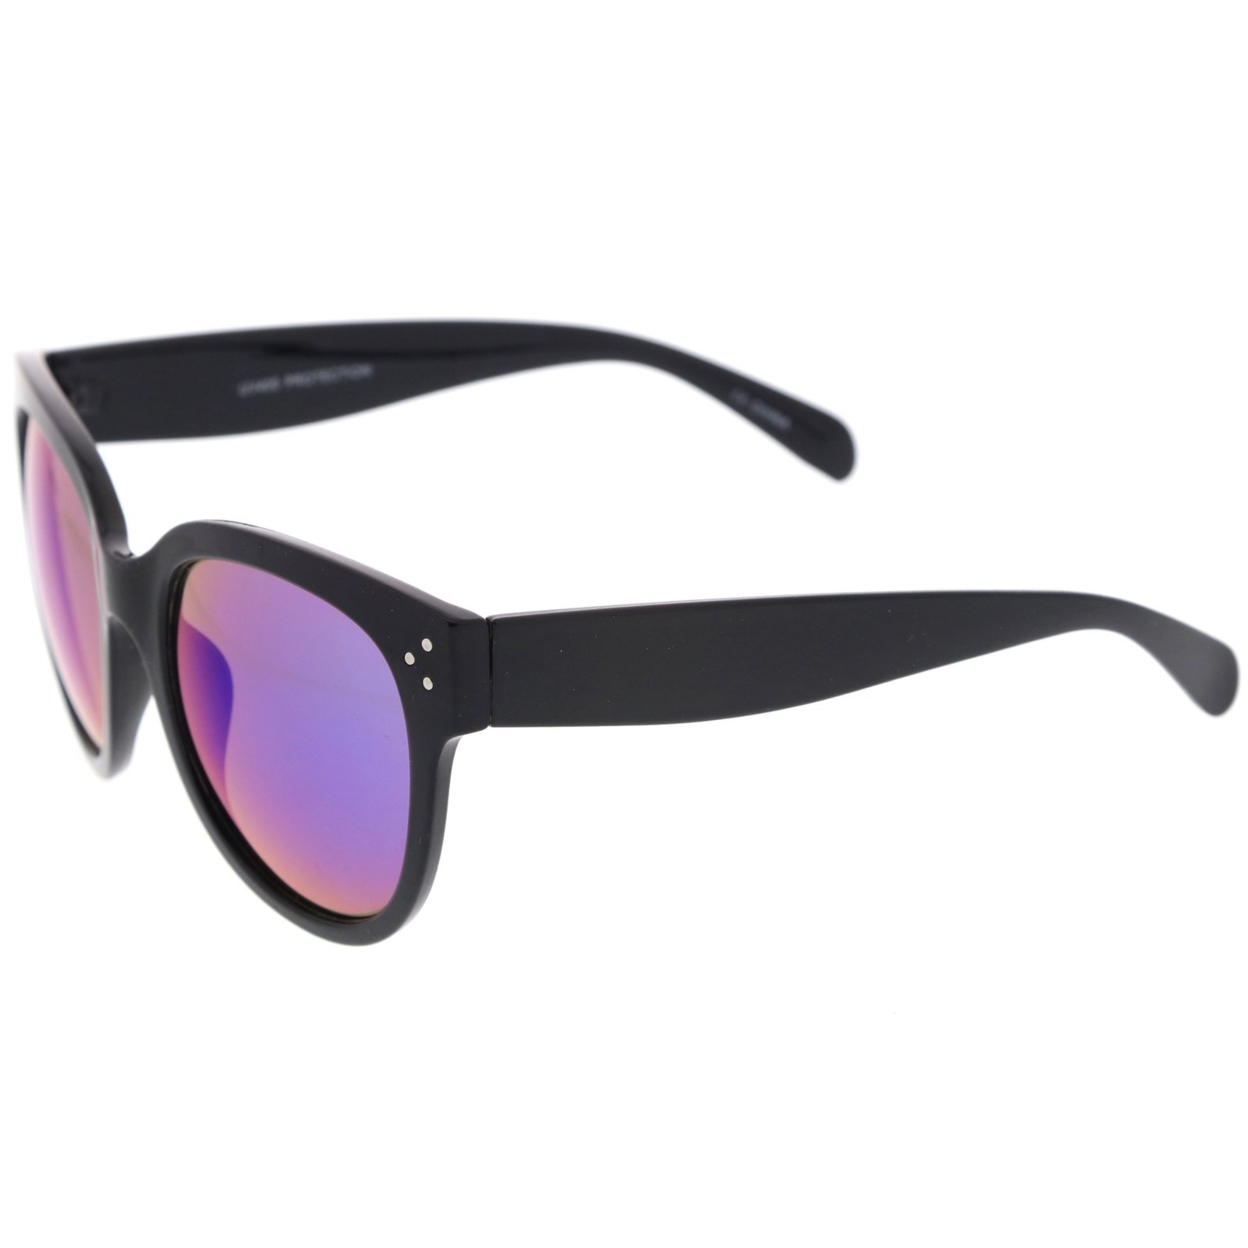 Women's Oversize Horn Rimmed Colored Mirror Lens Cat Eye Sunglasses 56mm - Black / Magenta-Green Mirror